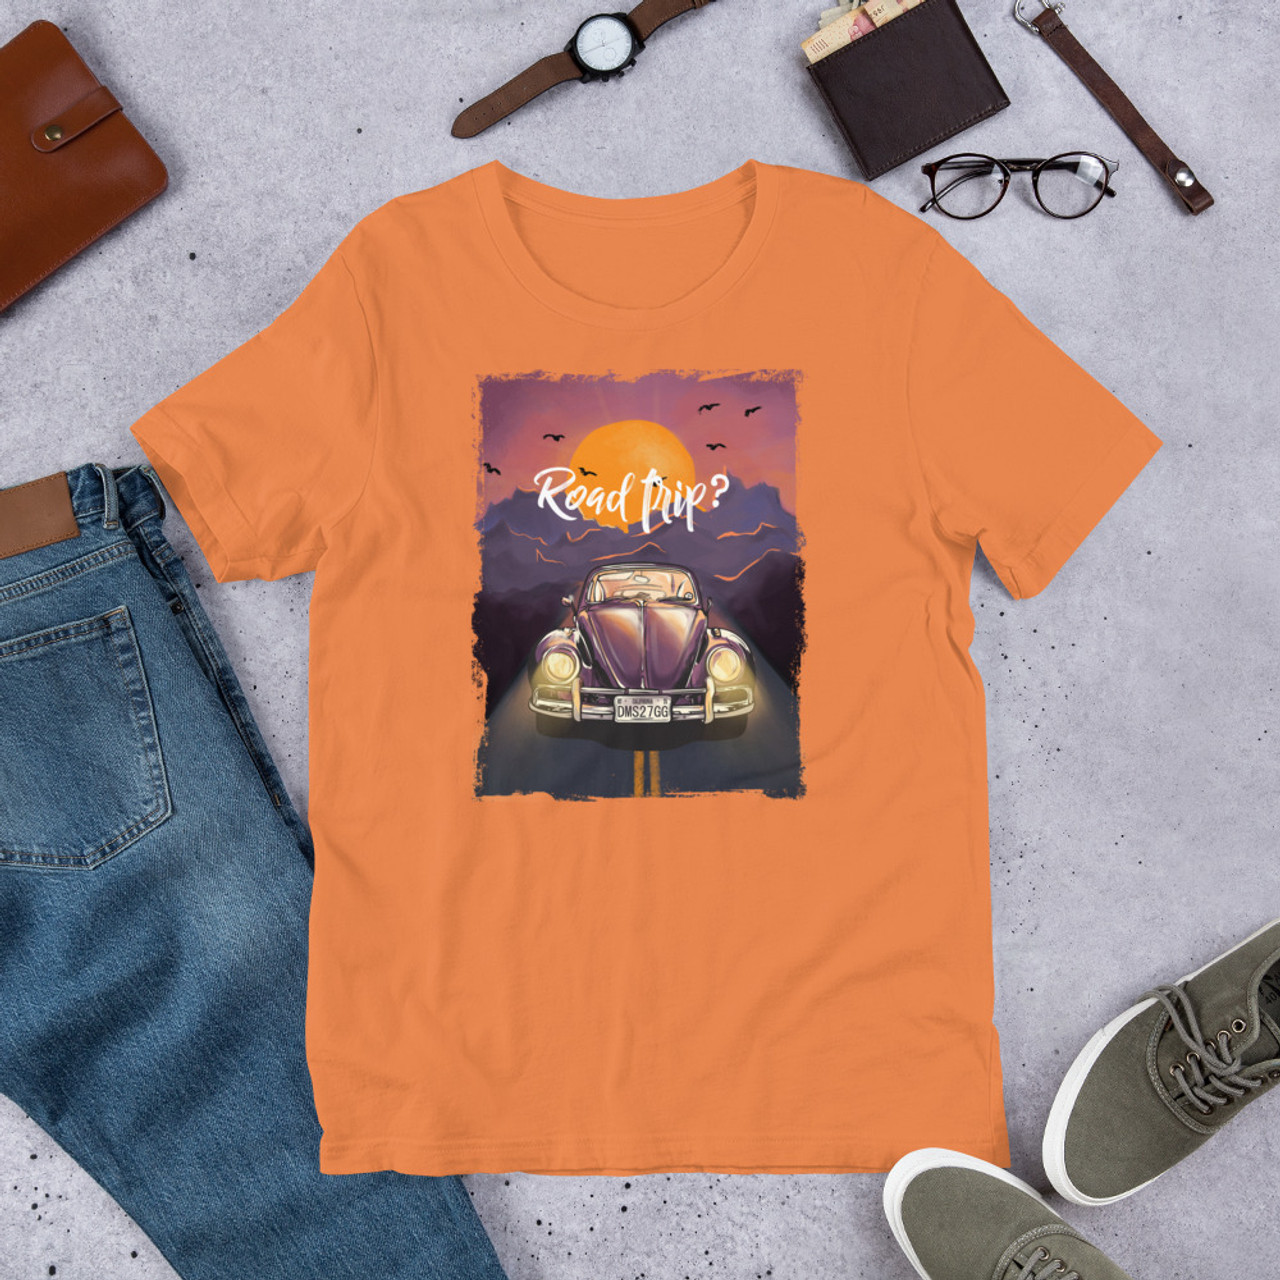 Burnt Orange T-Shirt - Bella + Canvas 3001 Sunset Road Trip